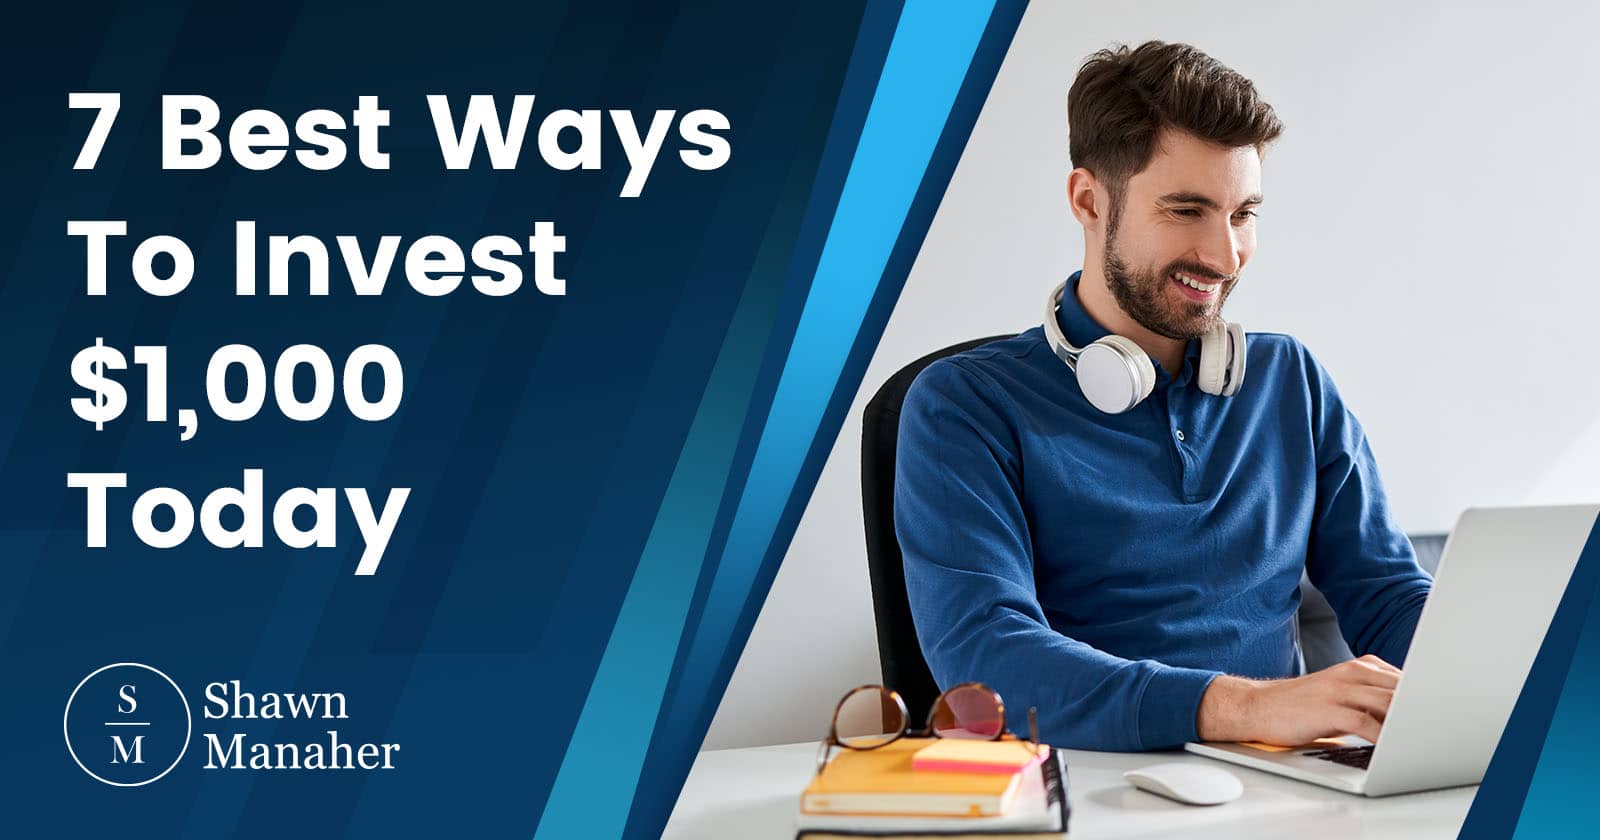 7 Best Ways To Invest $1,000 Today